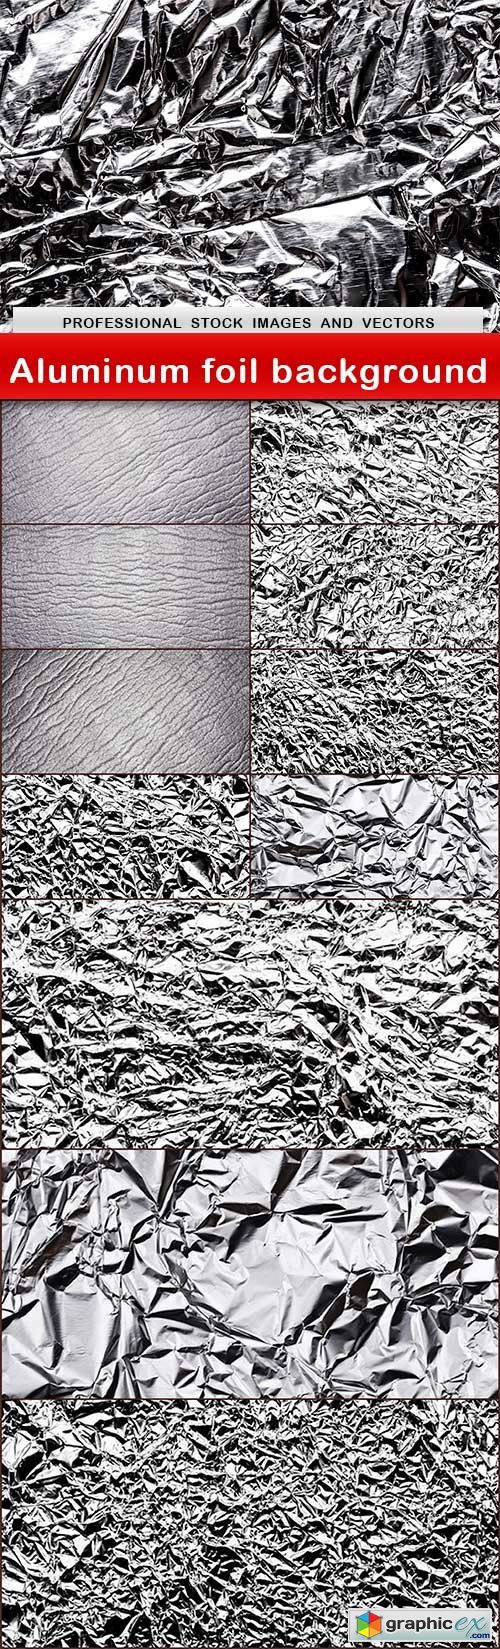 Aluminum foil background - 12 UHQ JPEG